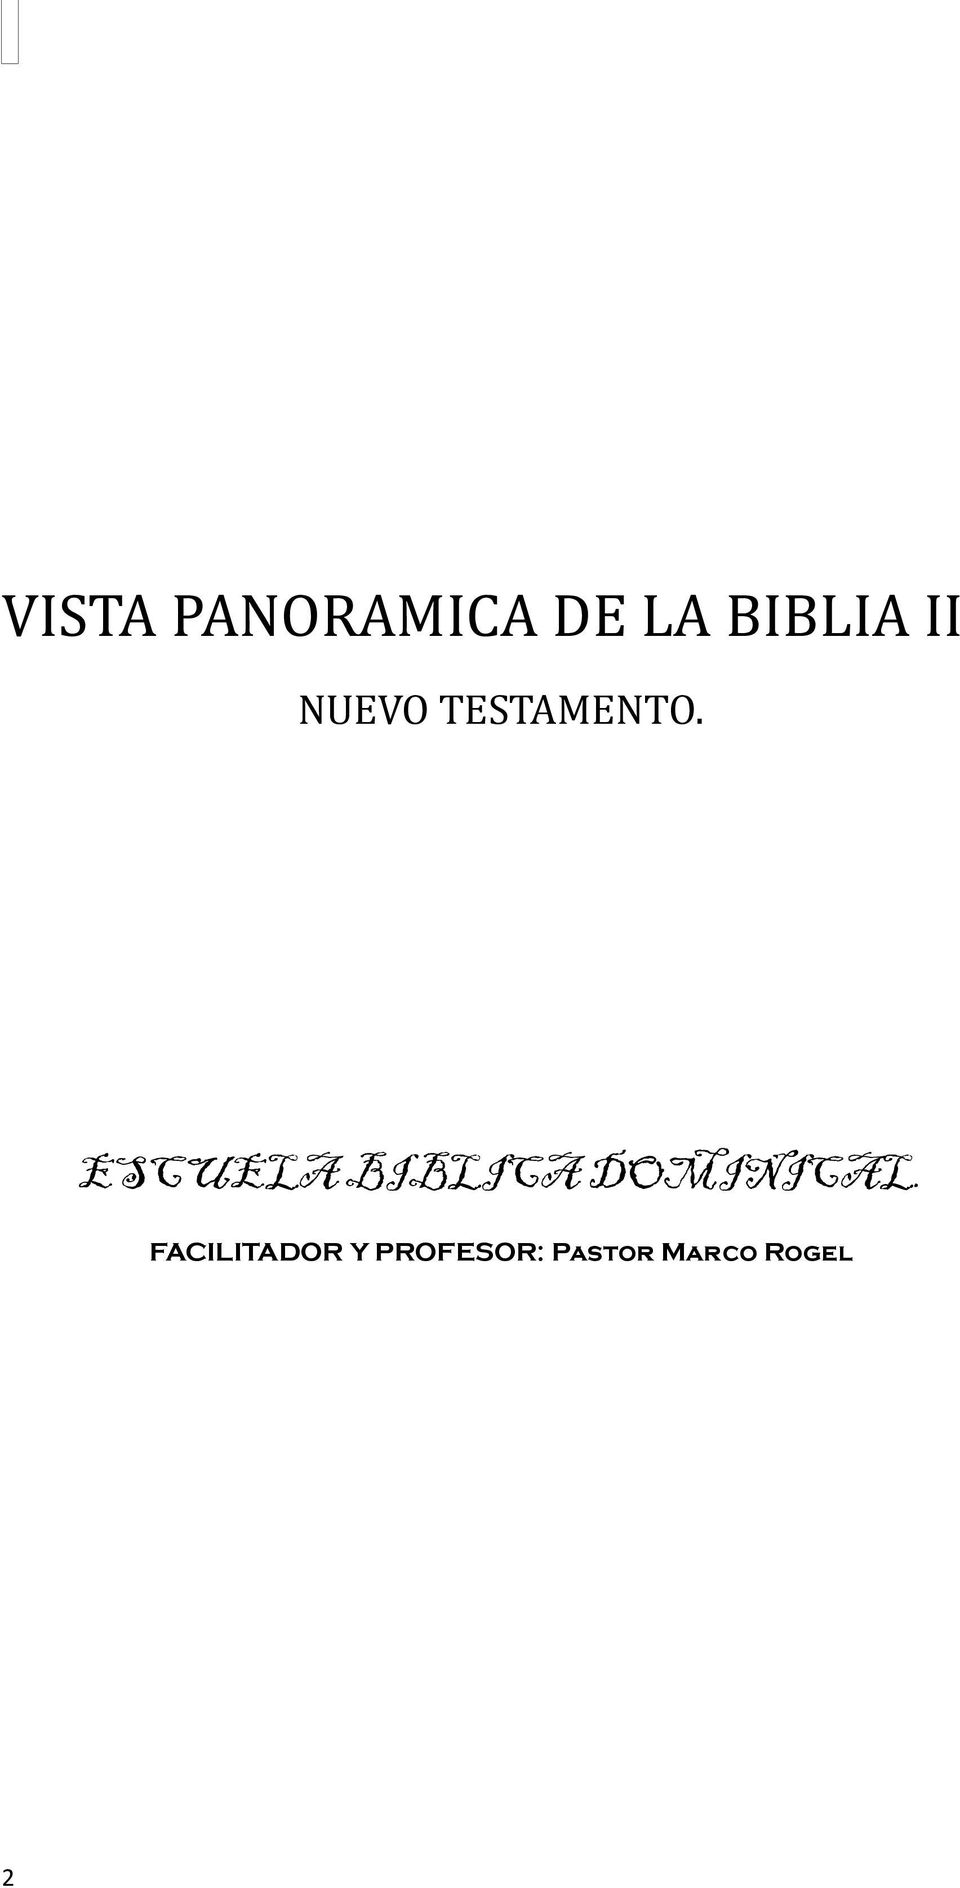 ESCUELA BIBLICA DOMINICAL.